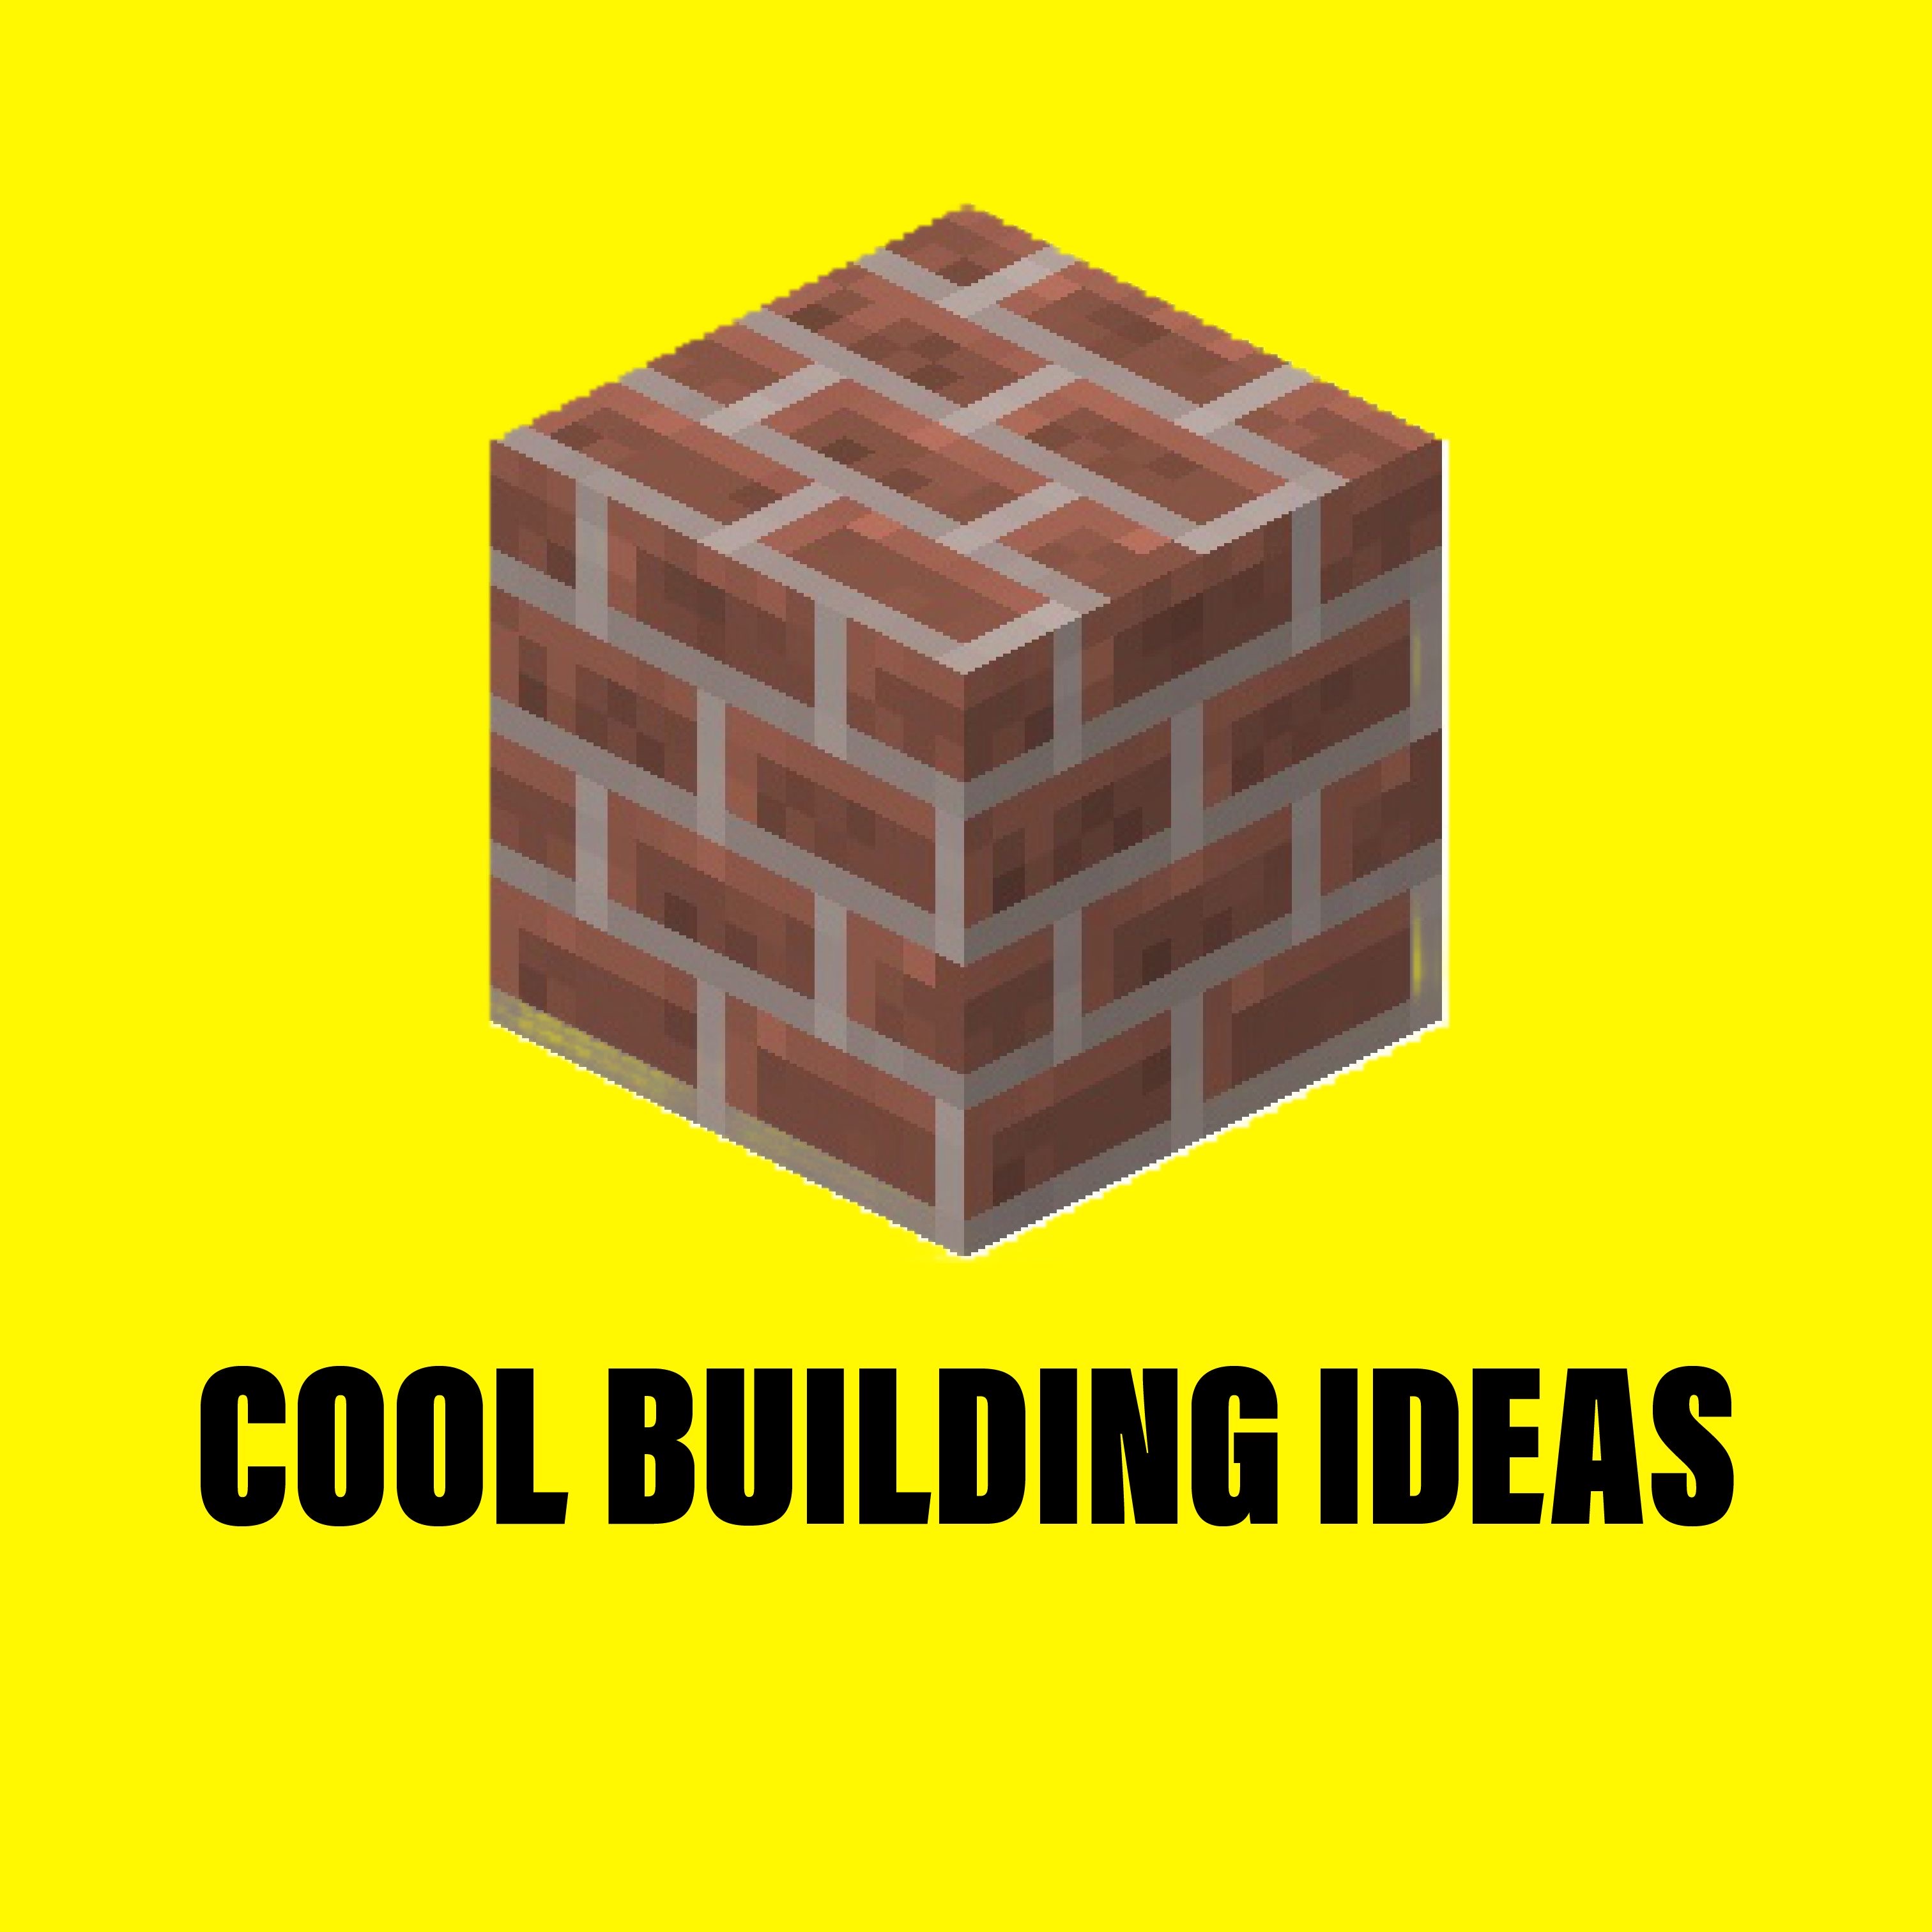 Cool building ideas